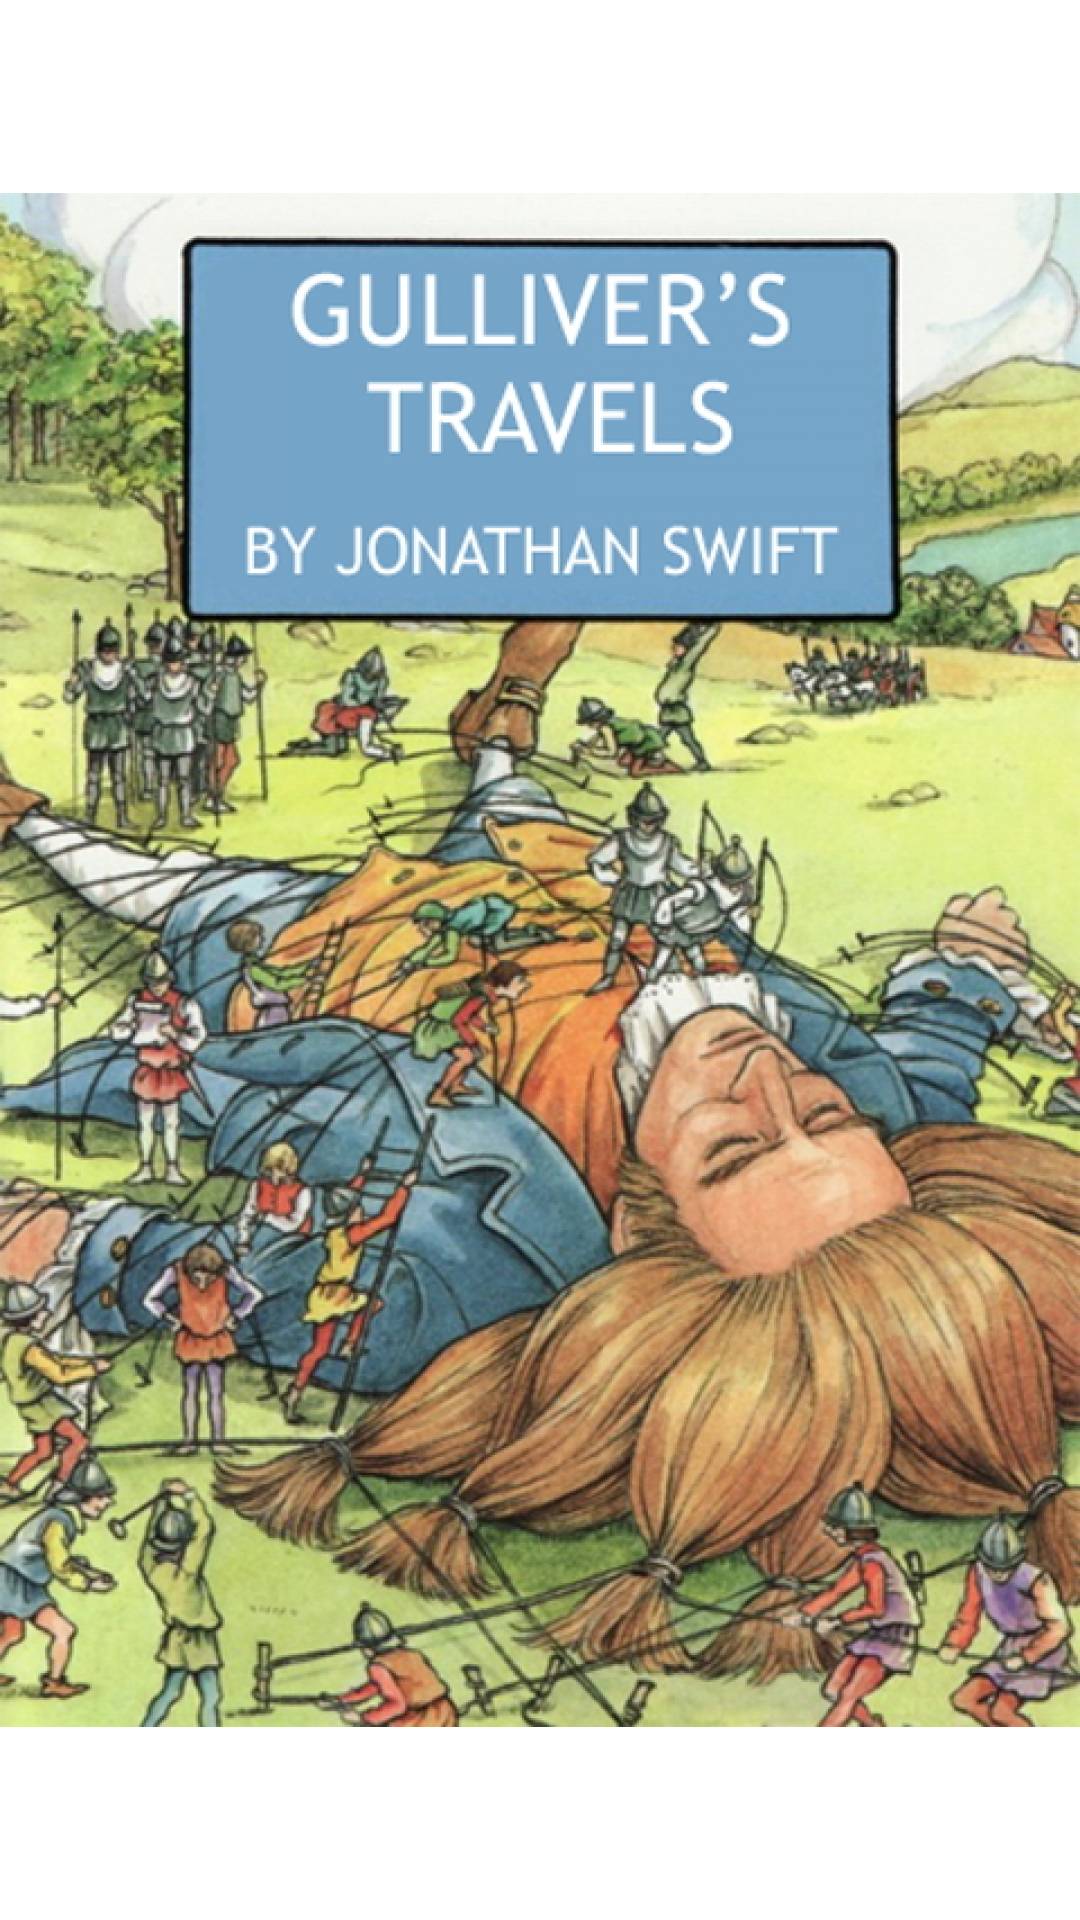 Jonathan Swift - Gulliver’s travels